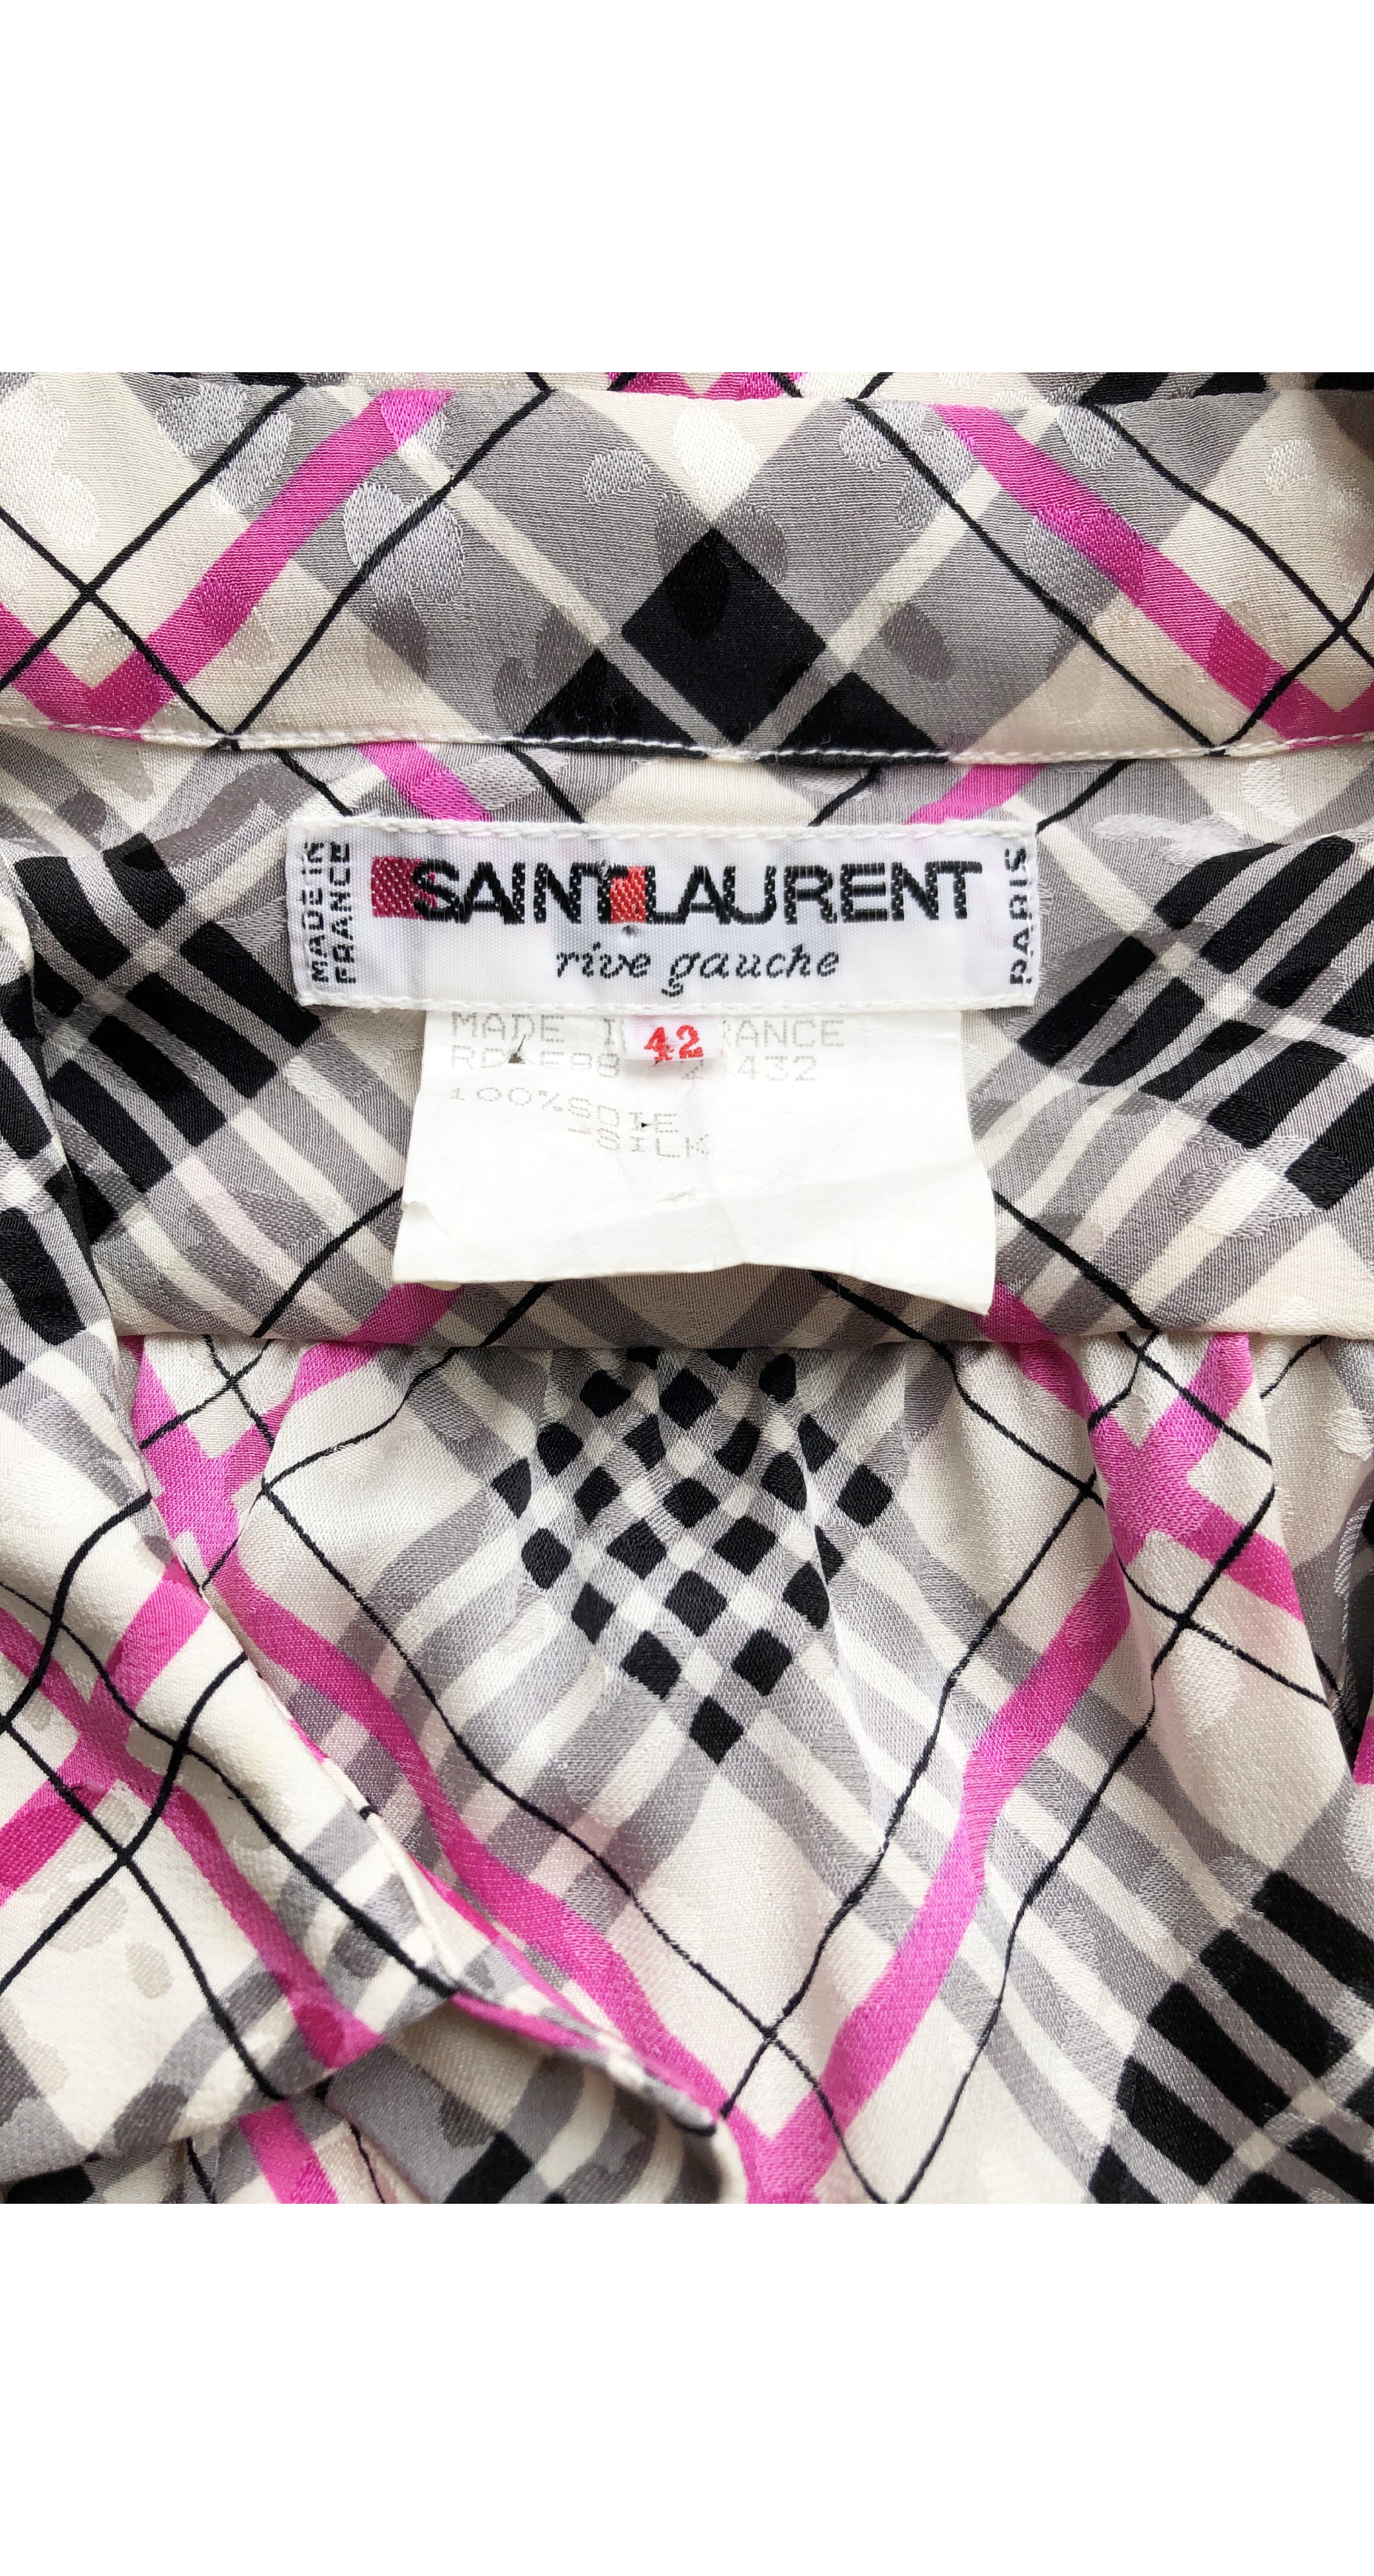 1988 S/S Pink & Gray Jacquard Silk Pleated Shirt Dress